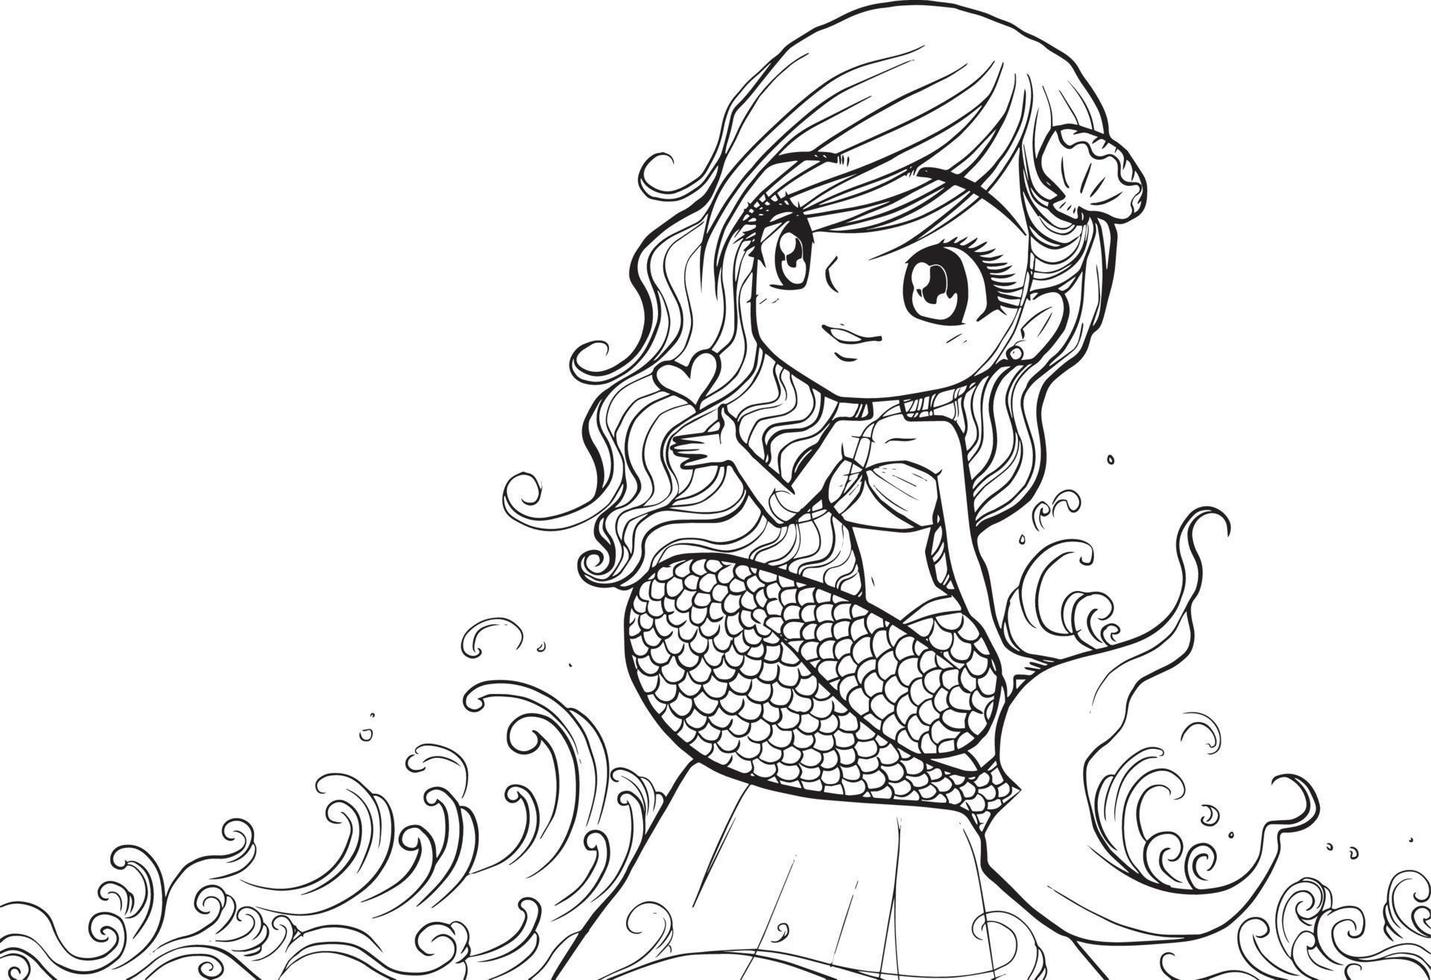 coloring page girl kawaii anime cute cartoon illustration clipart drawing adorable manga free download vector